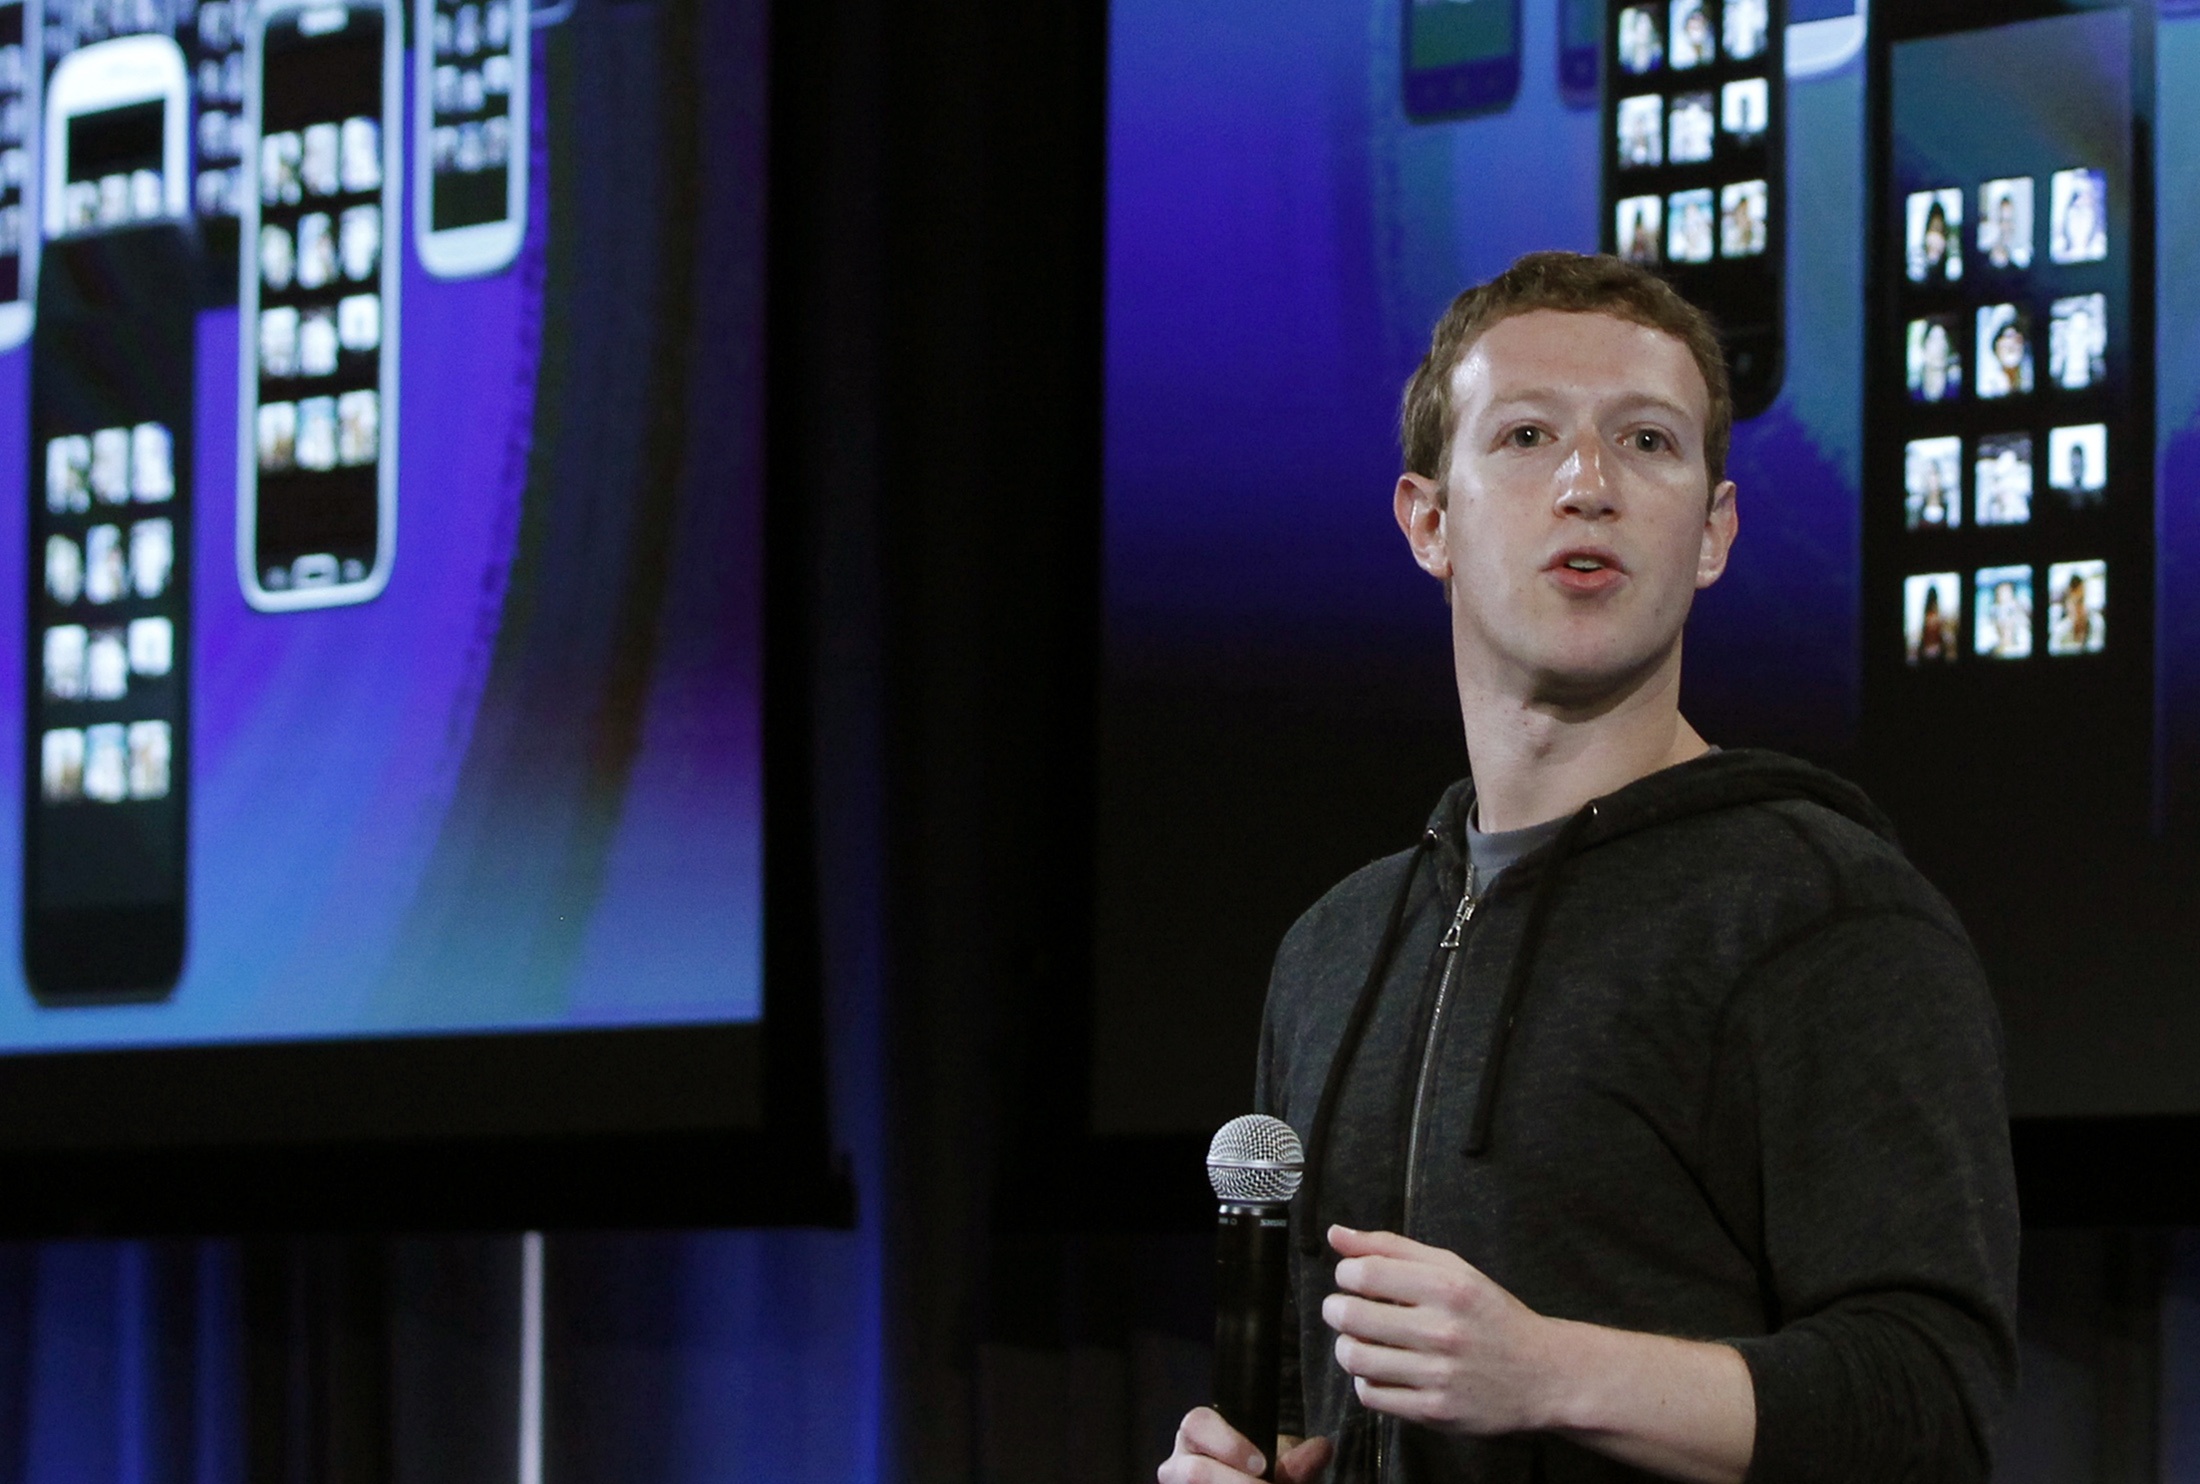 Iran summons Facebook's Zuckerberg over privacy: report